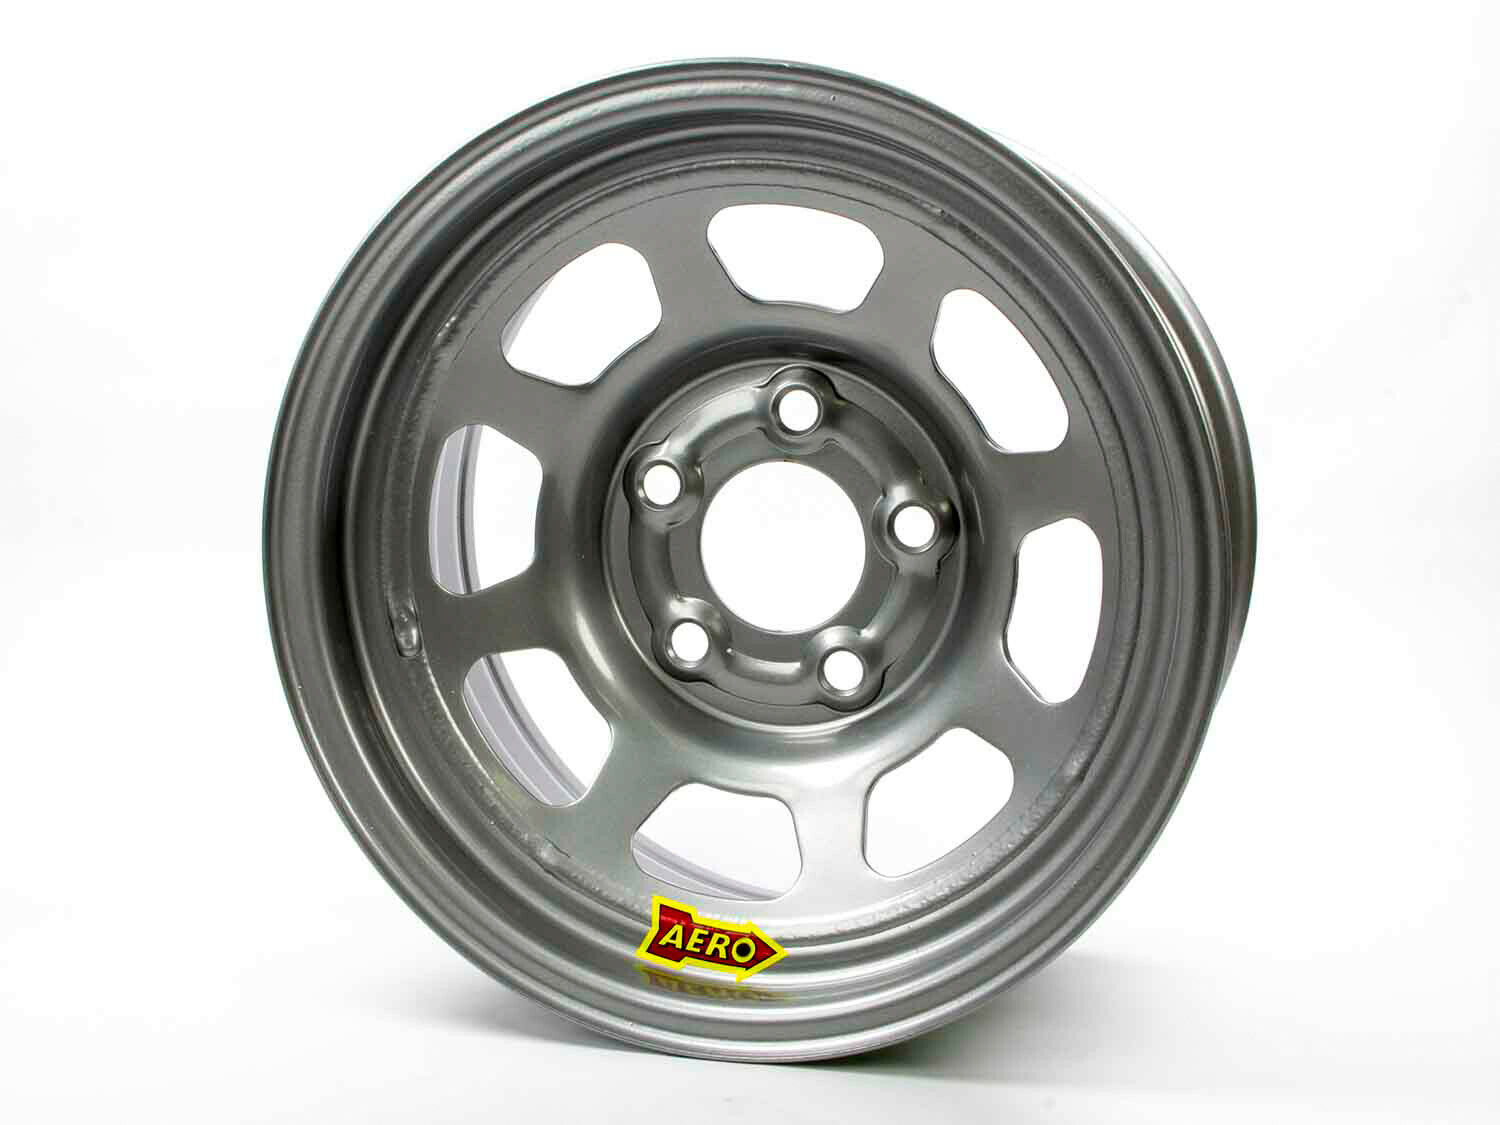 Aero Race Wheels 50-series 15x7 In 5x5.00 Silver Wheel P/n 50-075040